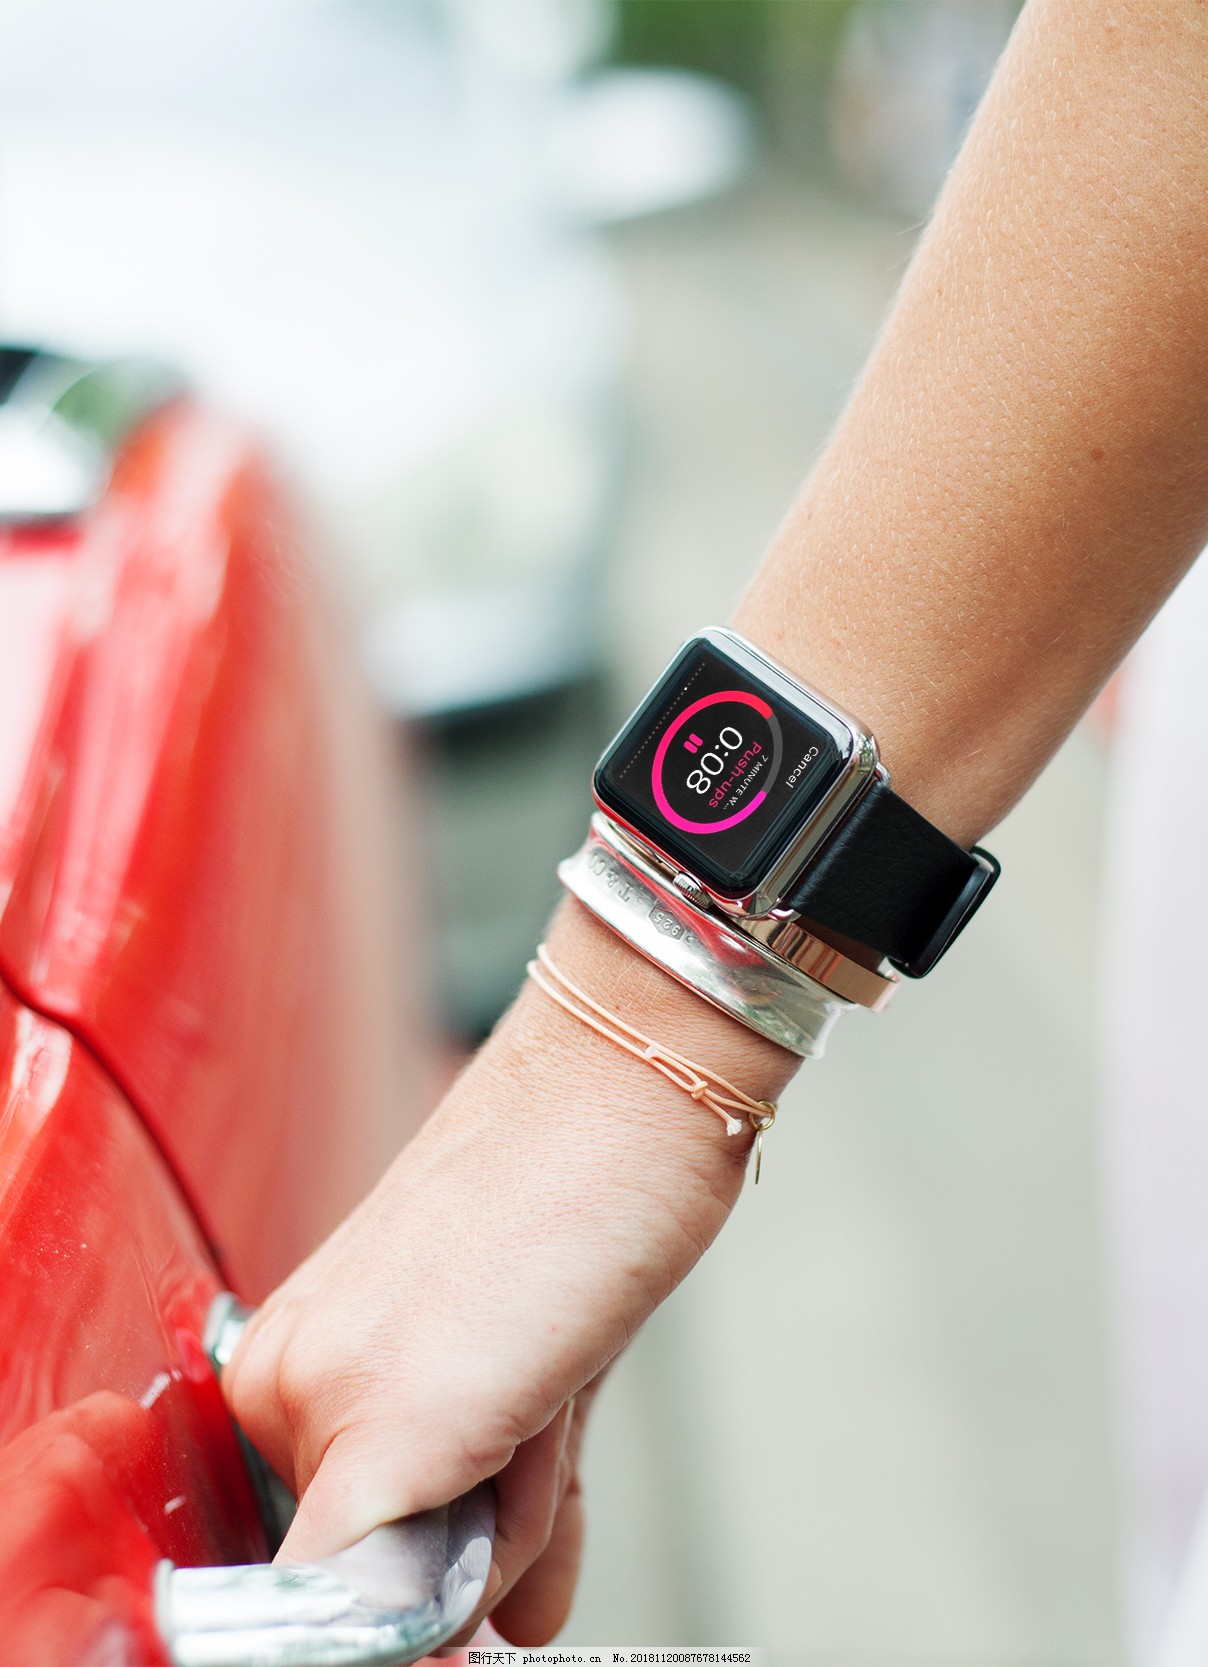 TAGHeuer Carrera Vision智能手表——电子与机械的完美结合，把科技戴在手上！ - 普象网